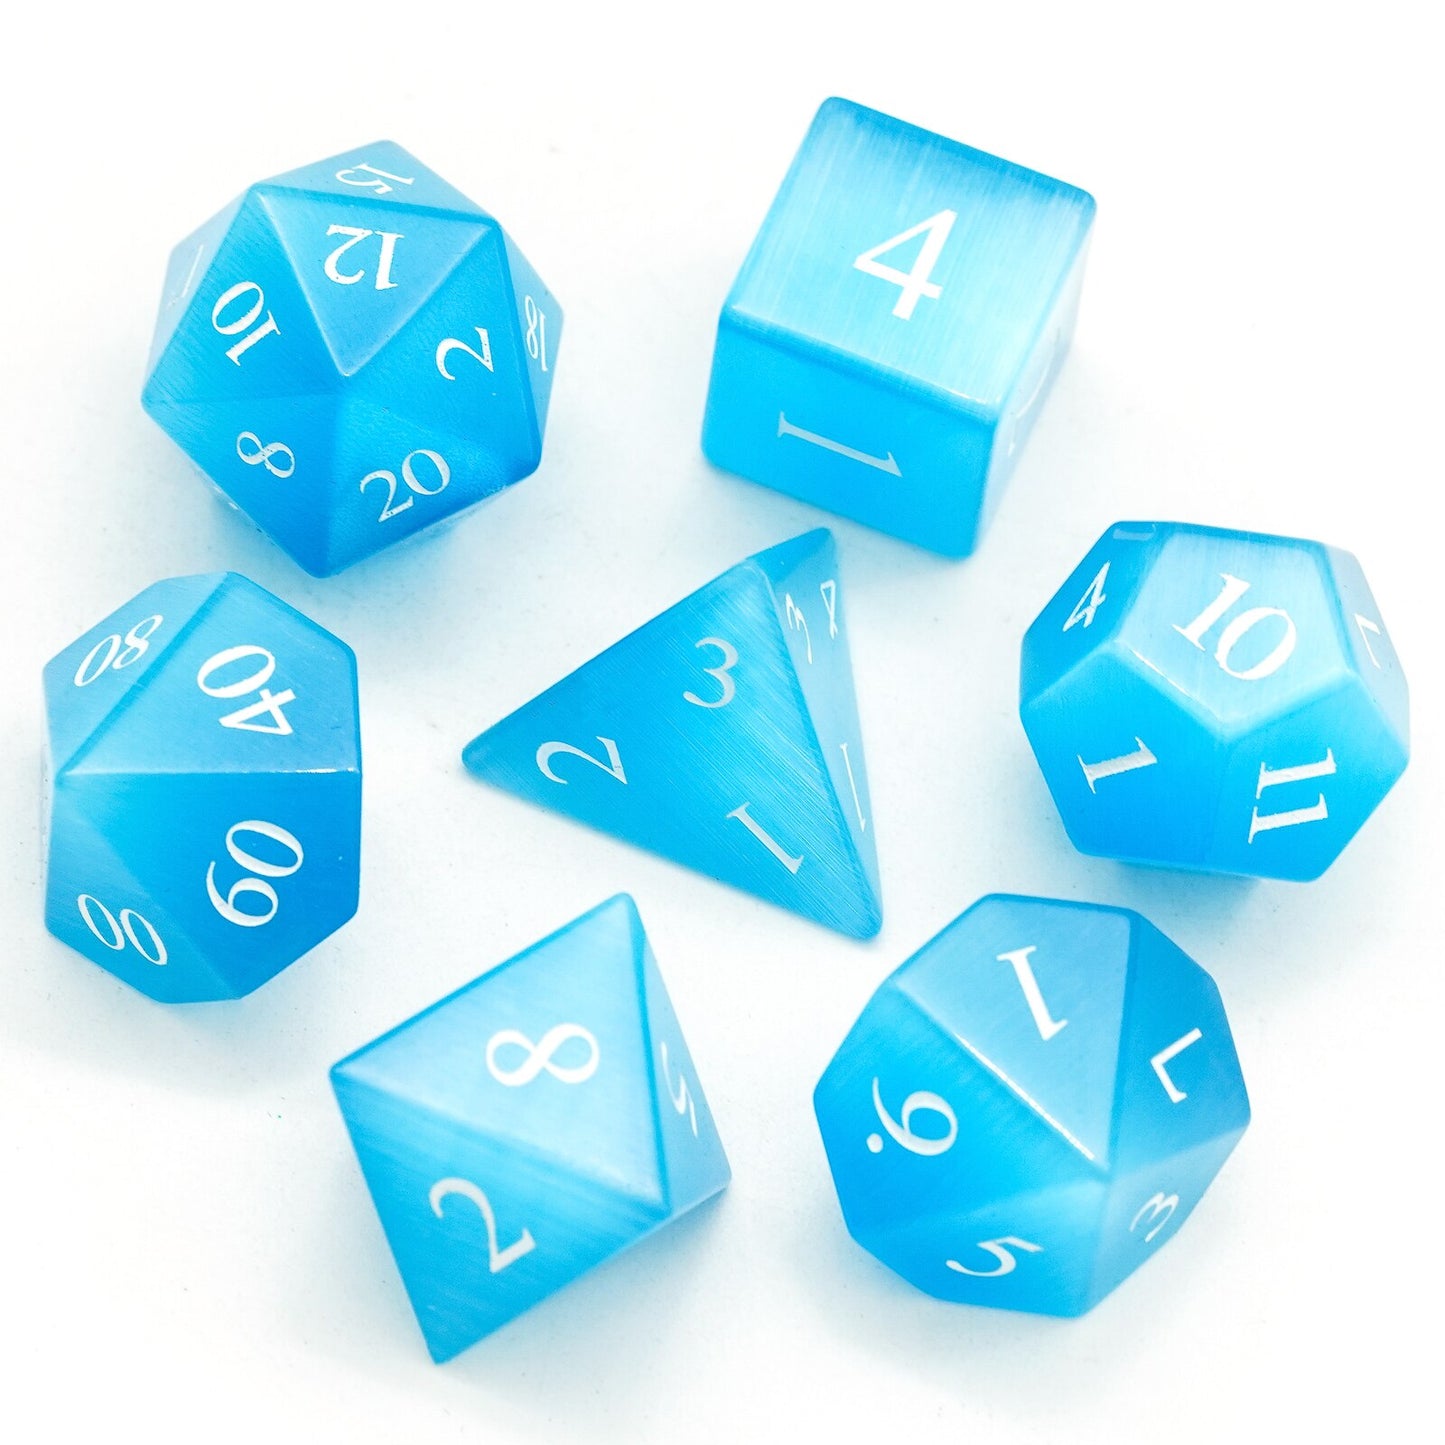 Light blue stone dice set